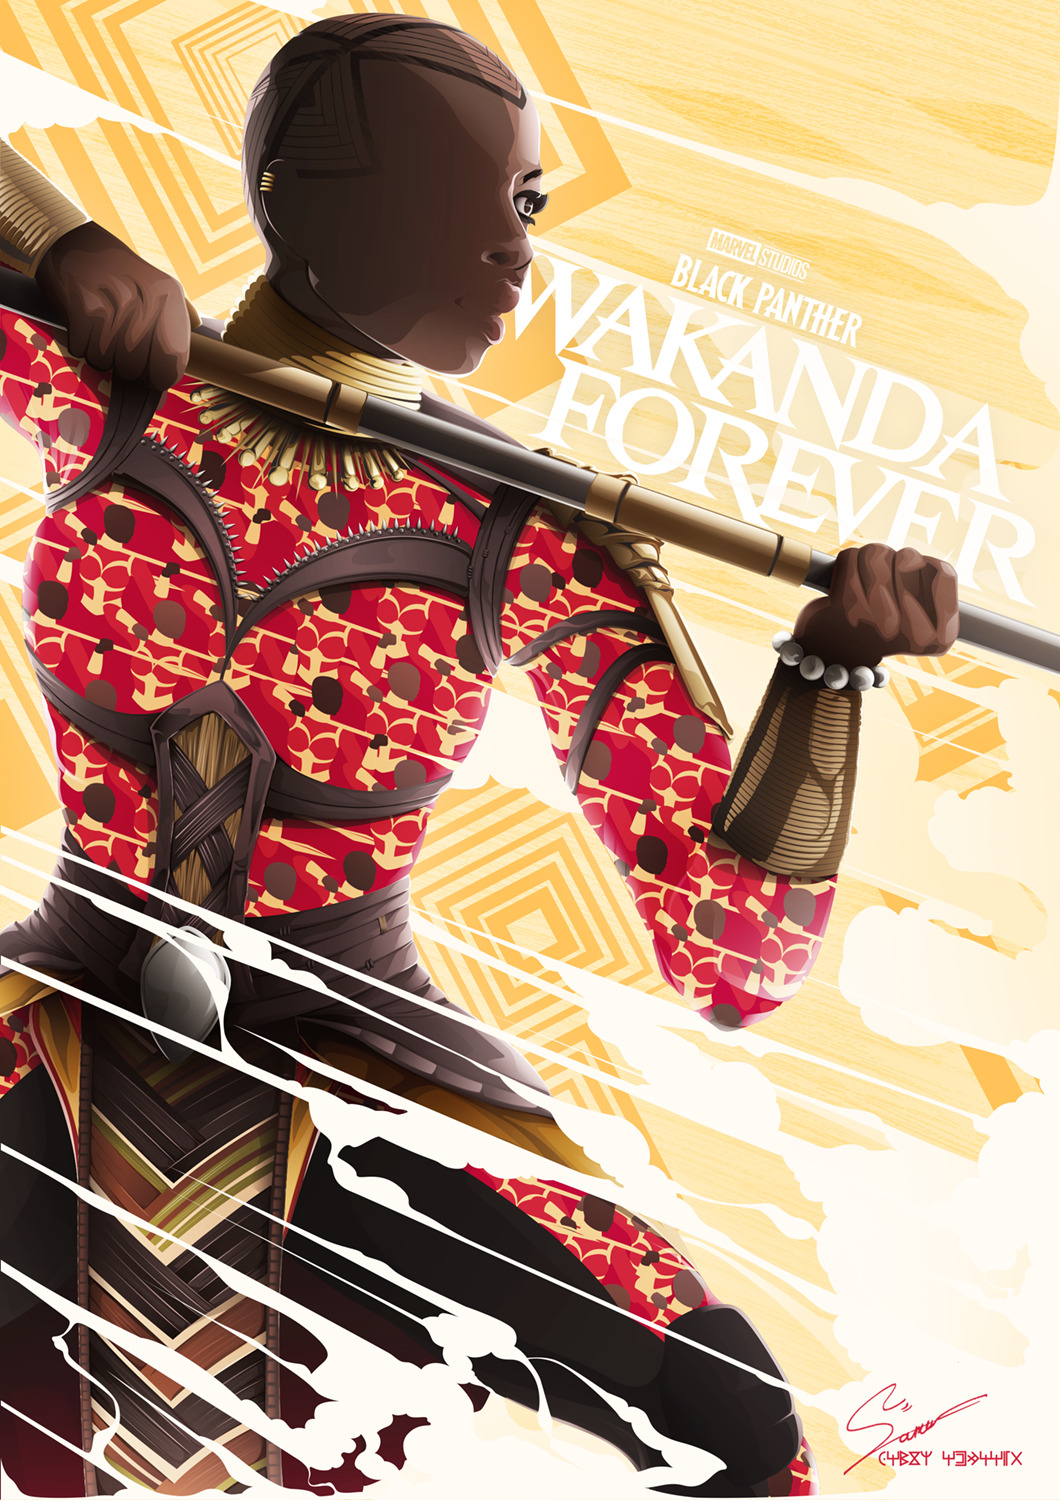 Black Panther Wakanda forever – Okoye and the Dora Milaje